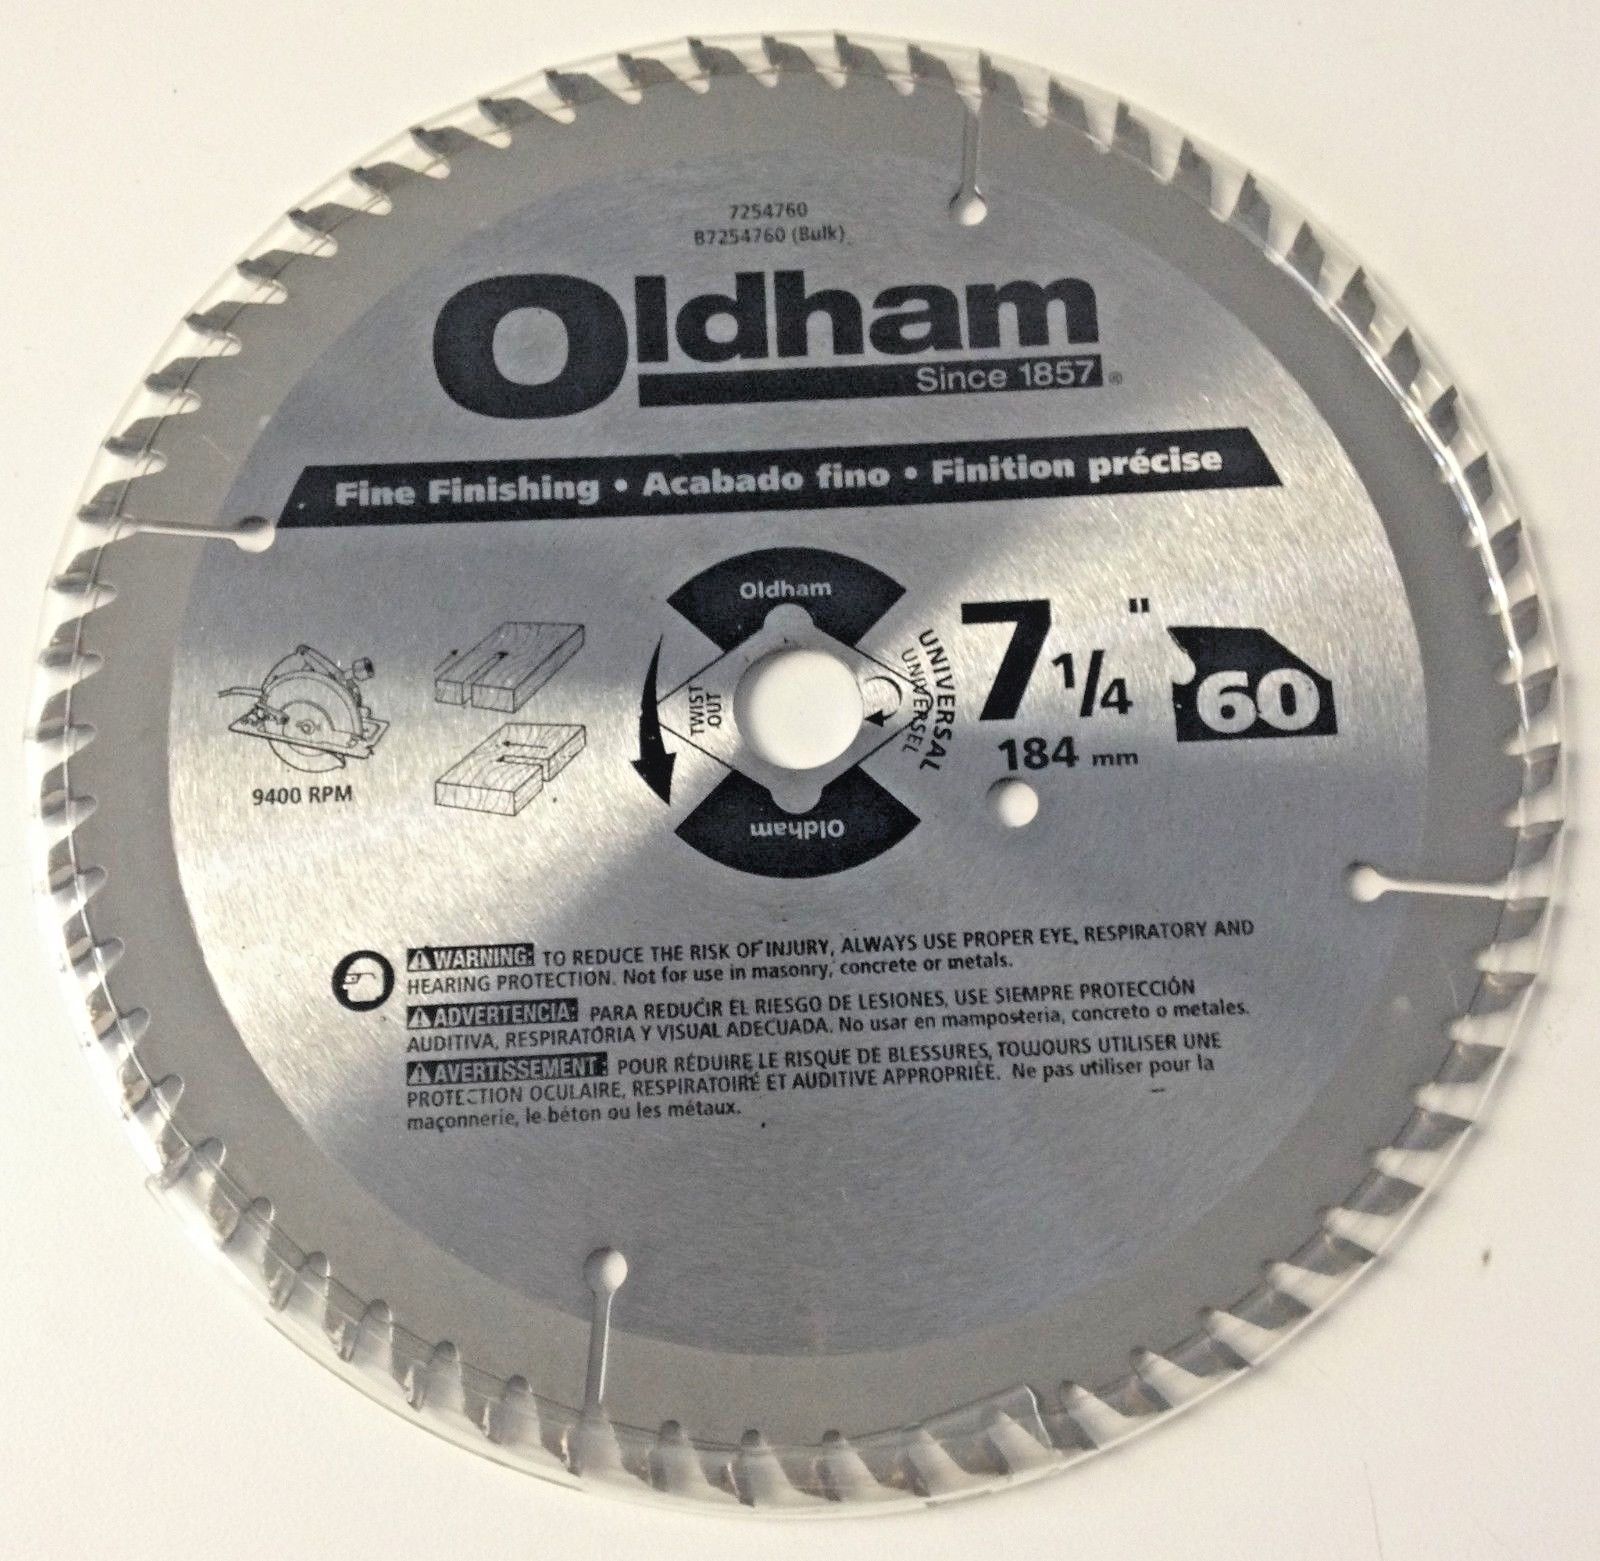 Oldham 7254760 7-1/4" x 60 Tooth Finishing Circular Saw Blade